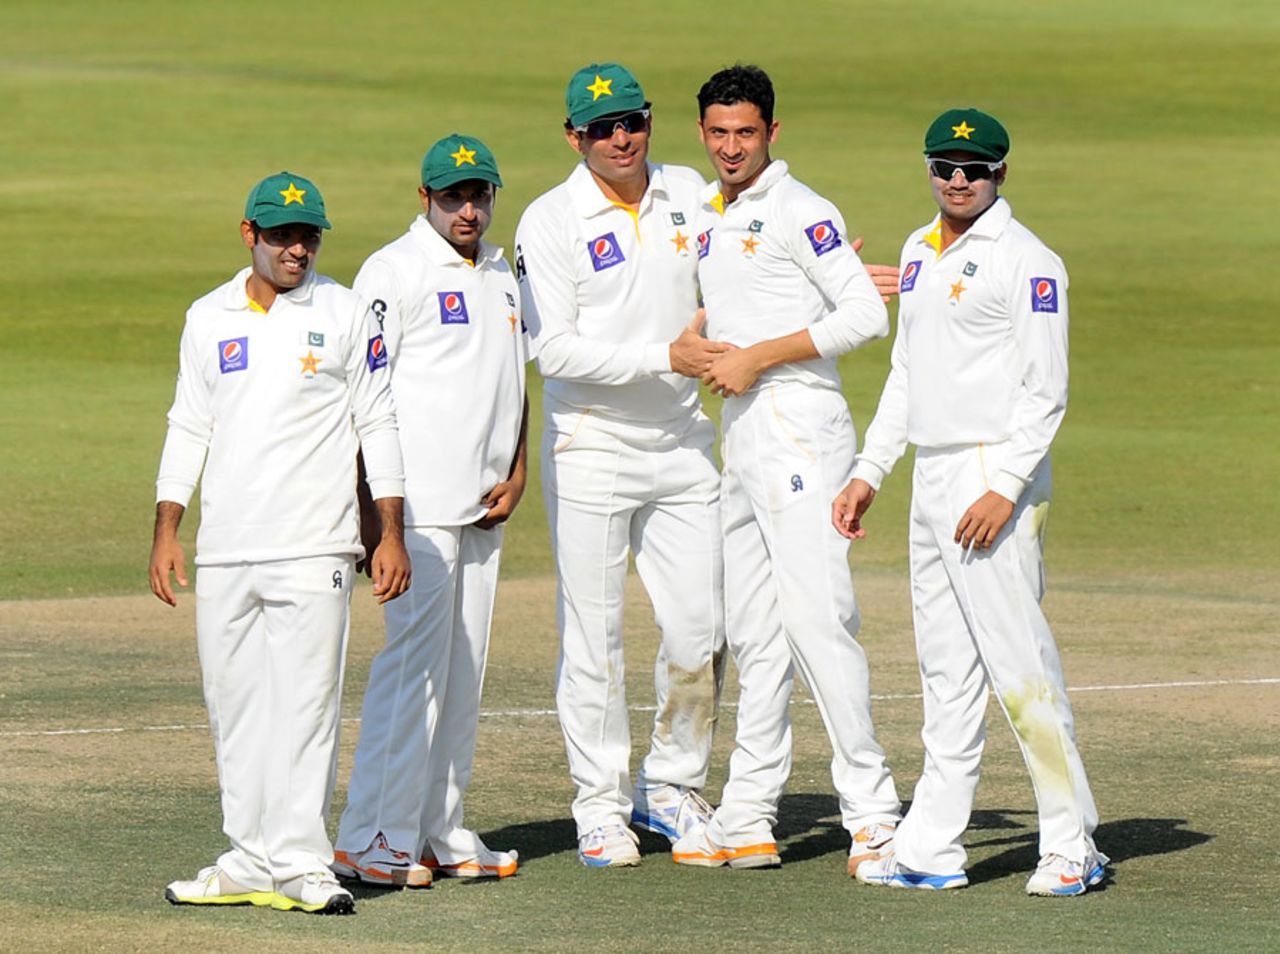 The Pakistan players celebrate a wicket, Pakistan v Sri Lanka, 1st Test, 4th day, Abu Dhabi, January 3, 2014